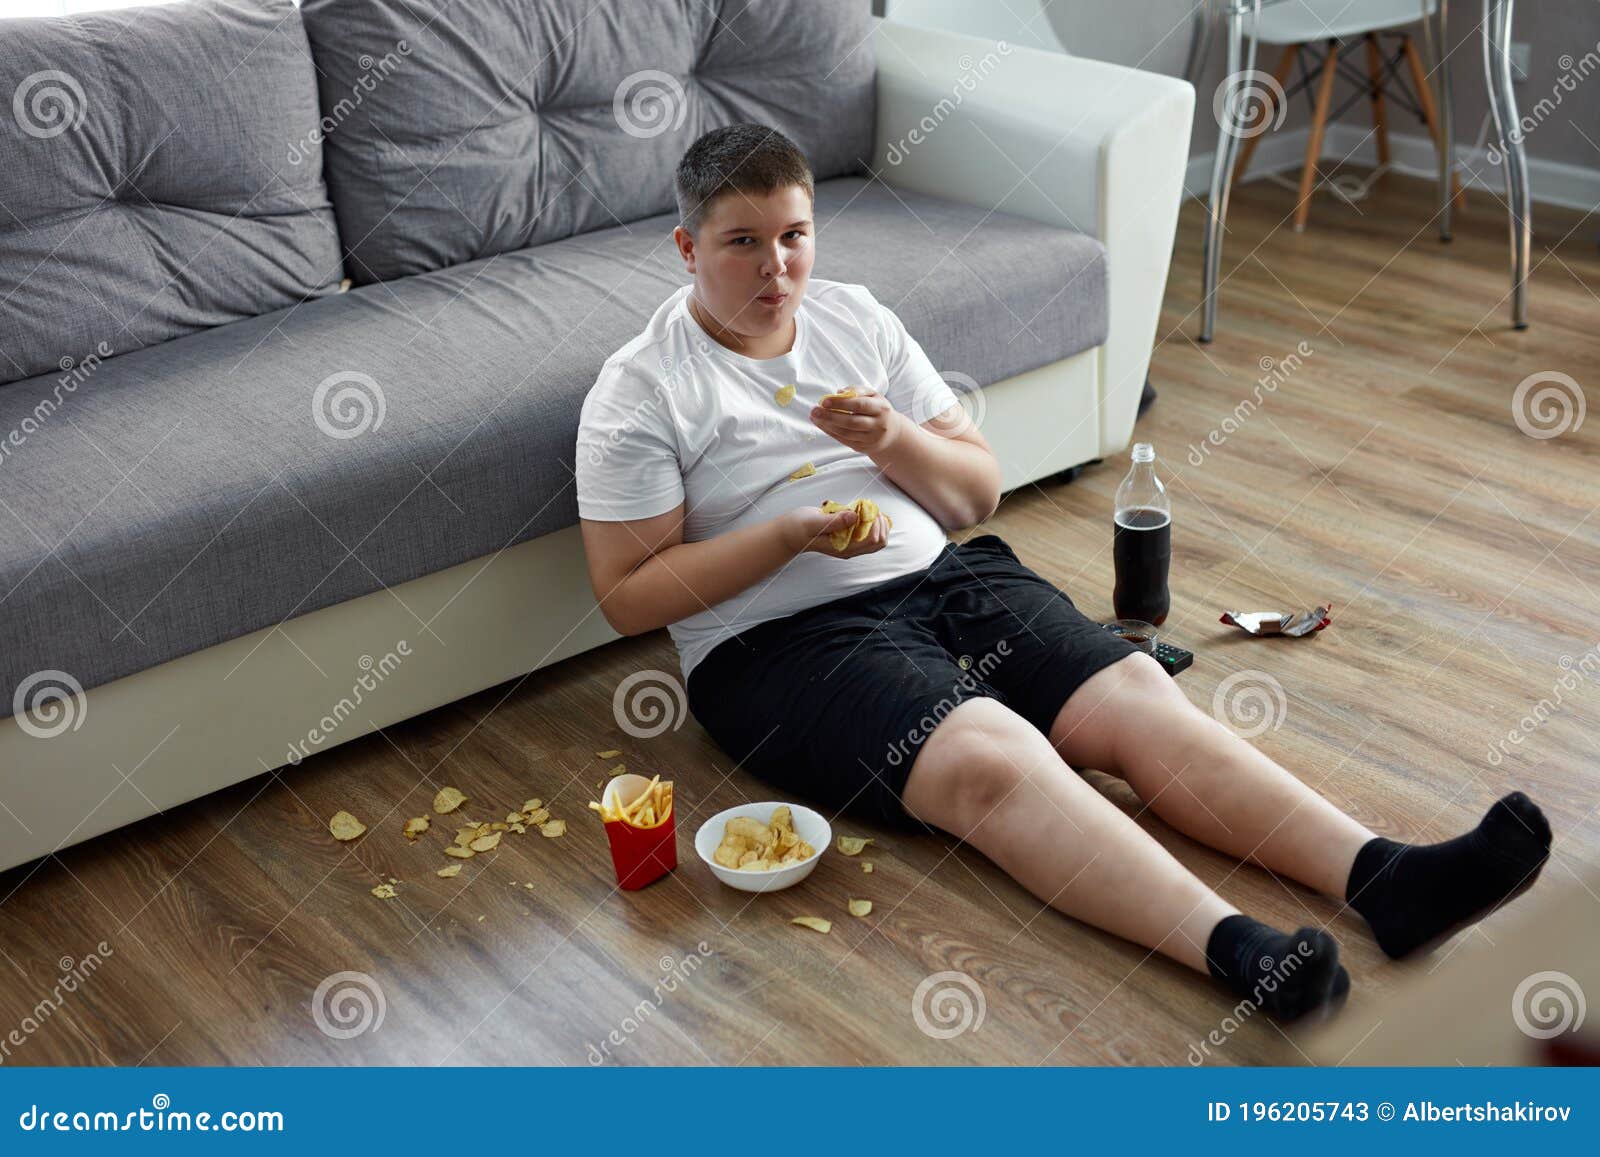 overweight-fat-boy-eat-junk-food-watching-tv-alone-home-overweight-fat-boy-eat-junk-food-watching-tv-alone-home-196205743.jpg